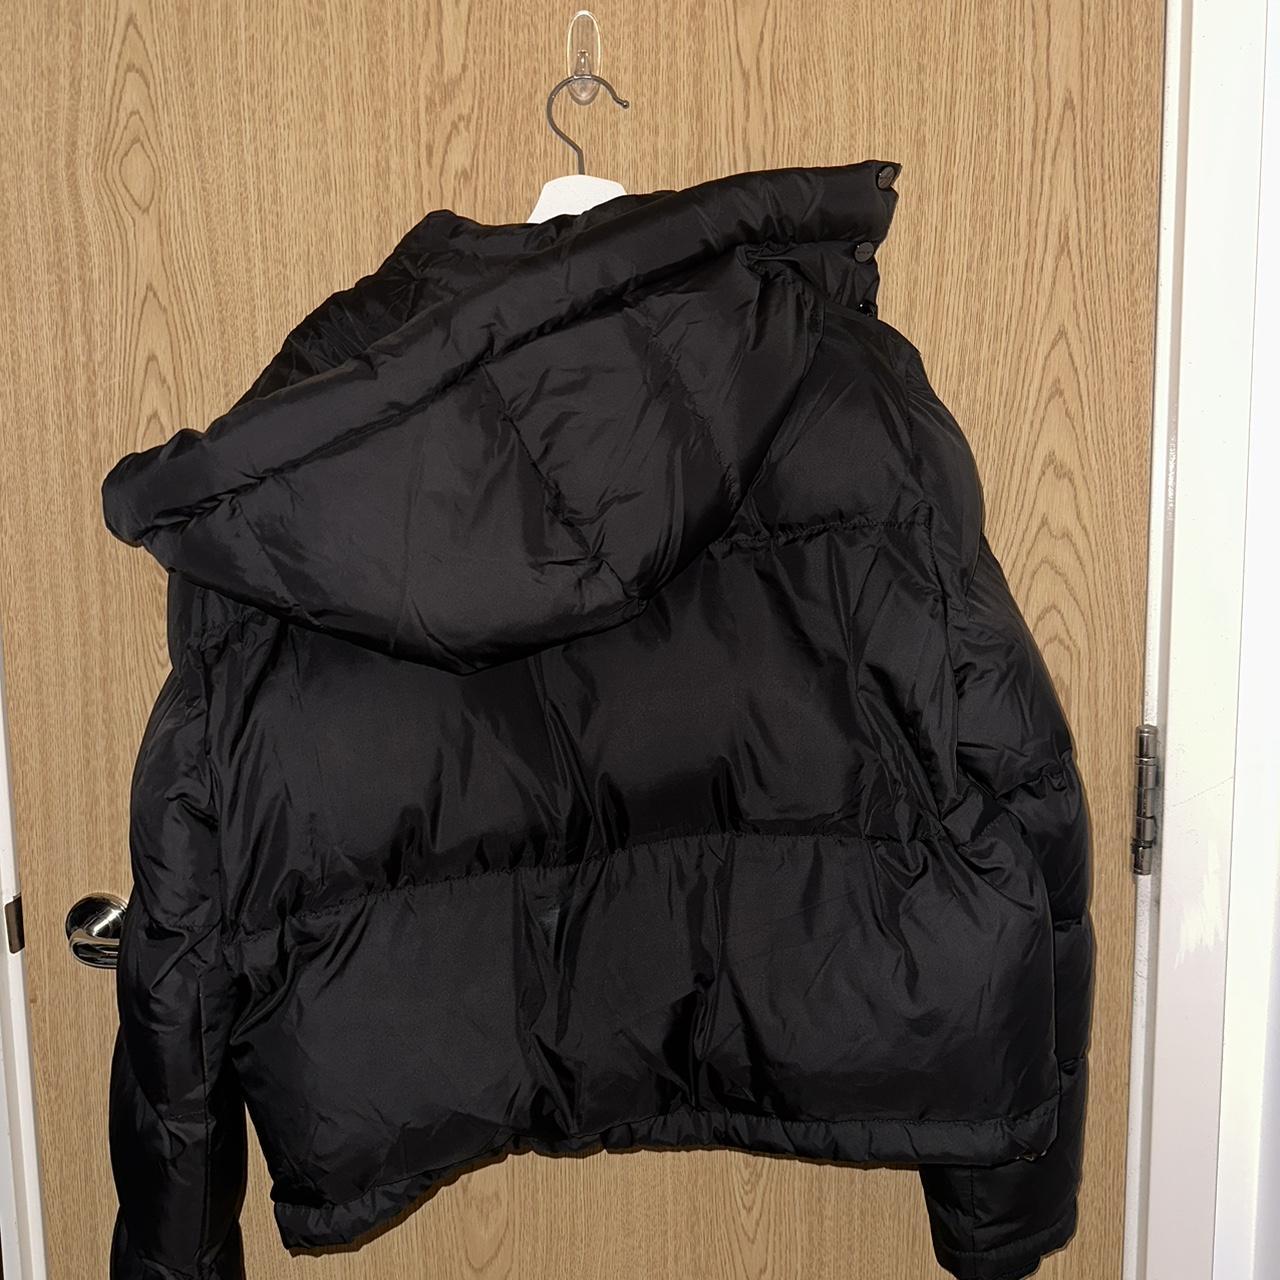 MERCIER cropped puffer jacket - literally brand... - Depop